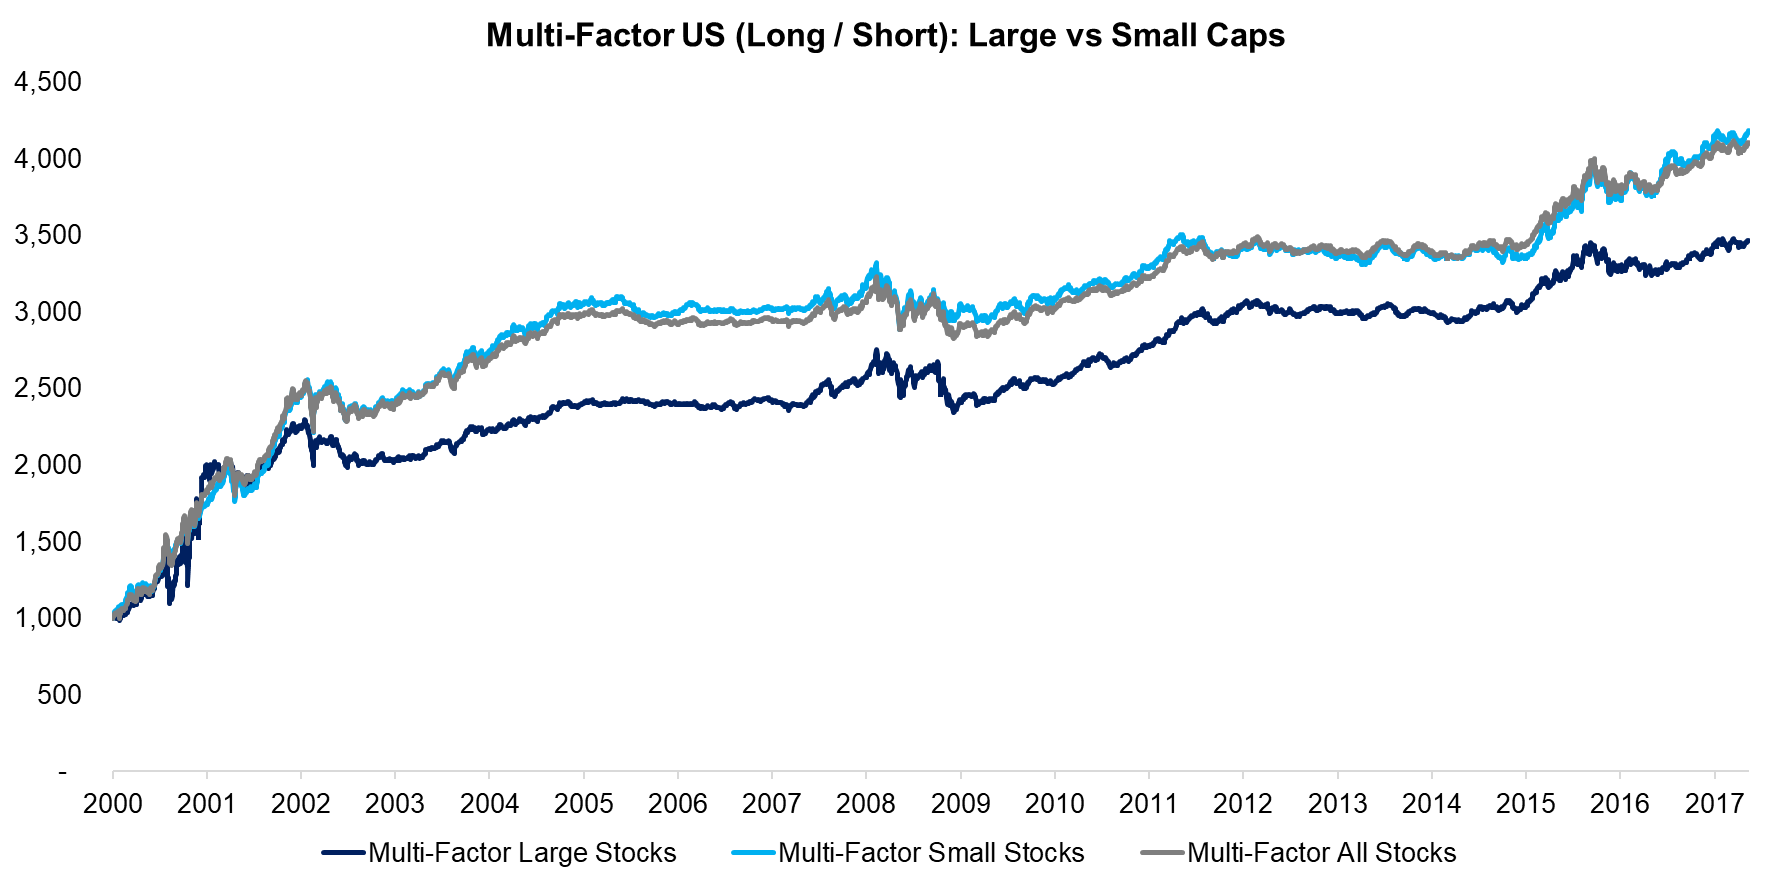 Multi-Factor US (Long Short) Large vs Small Caps